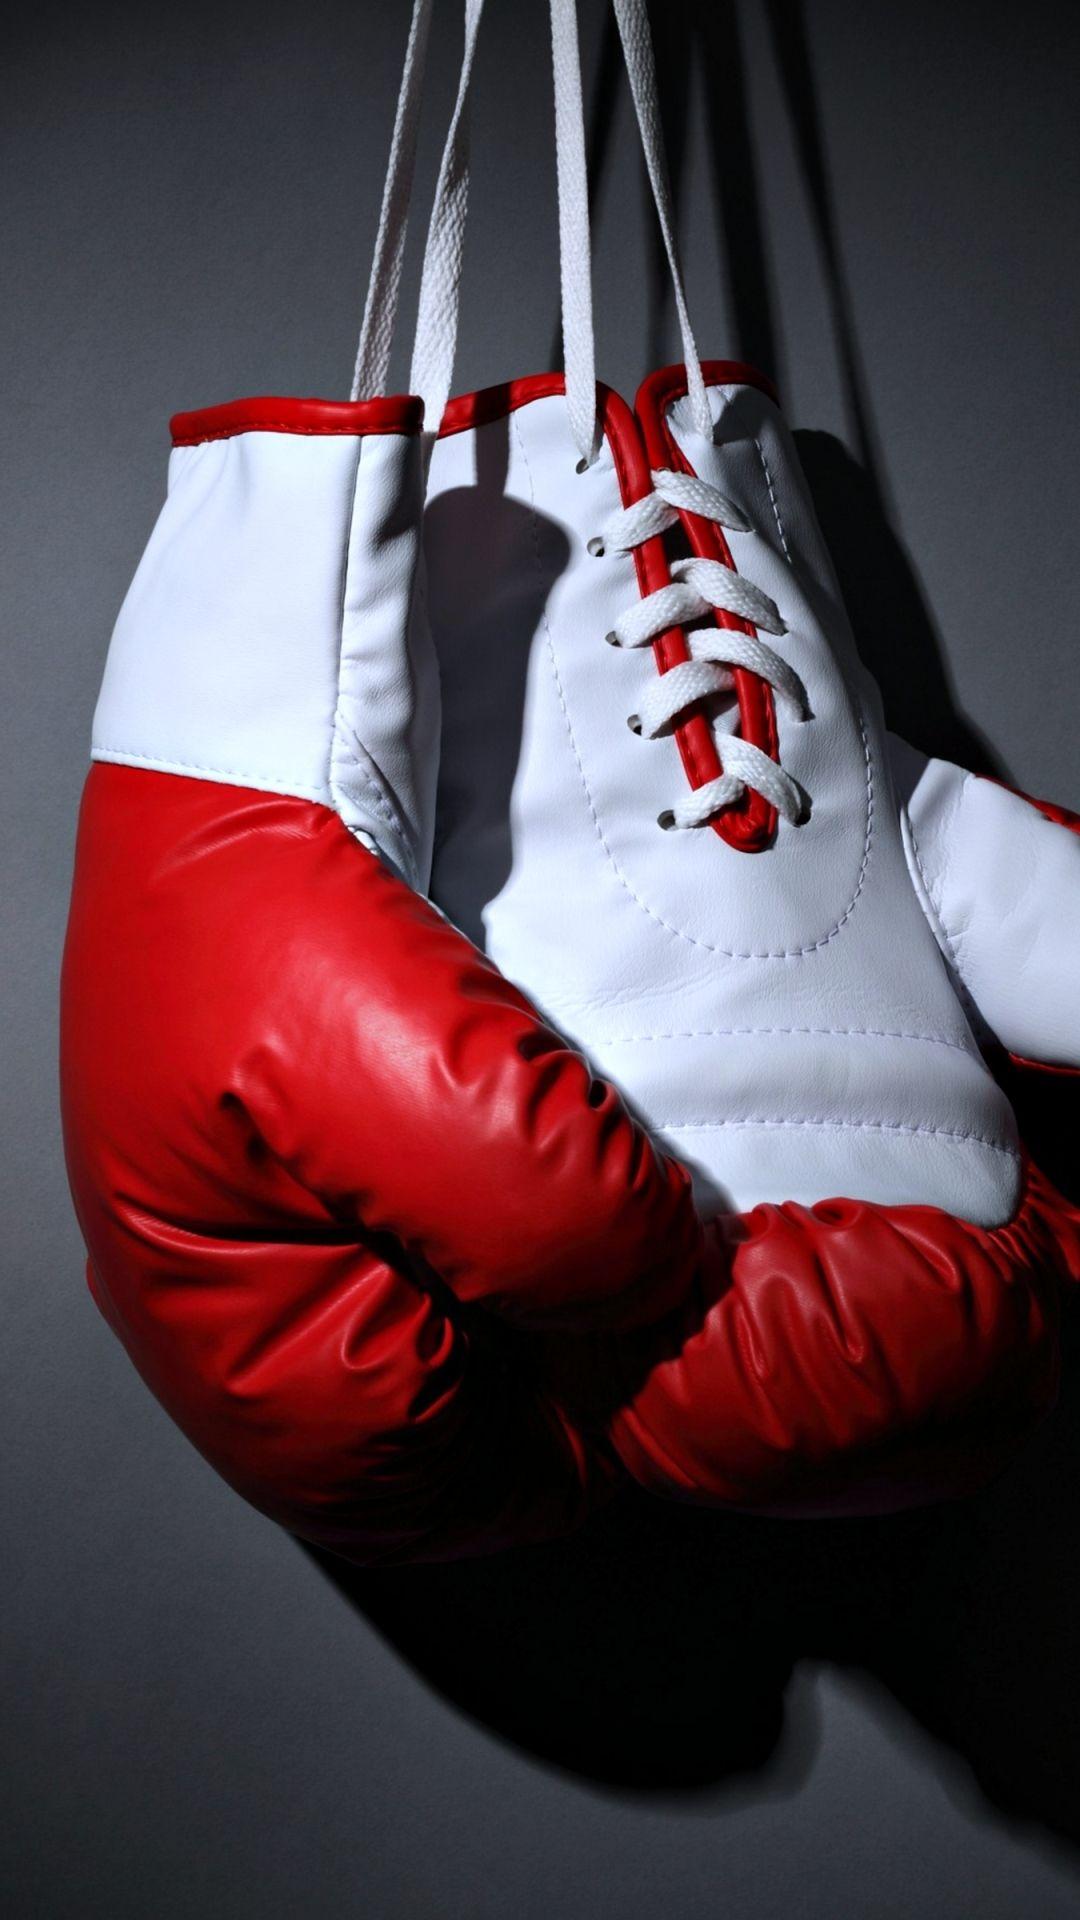 Sports|Boxing